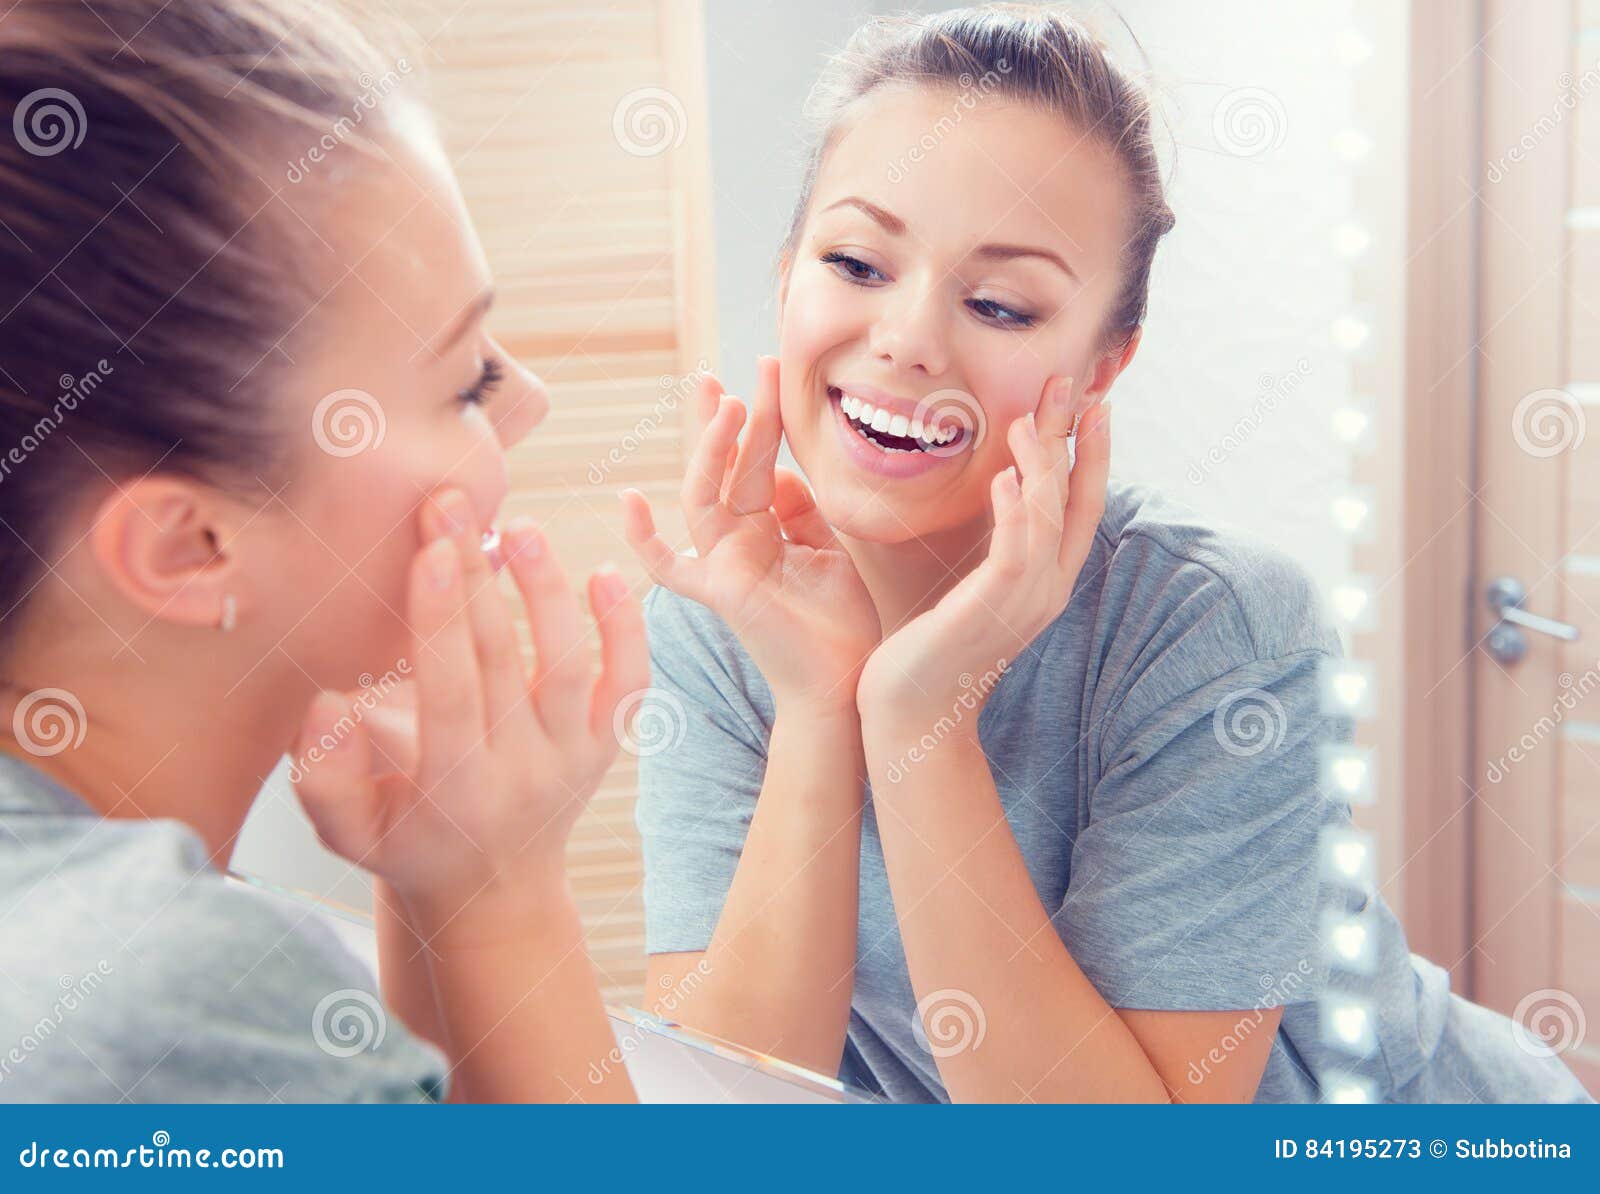 skincare. young beautiful teenage girl touching her face